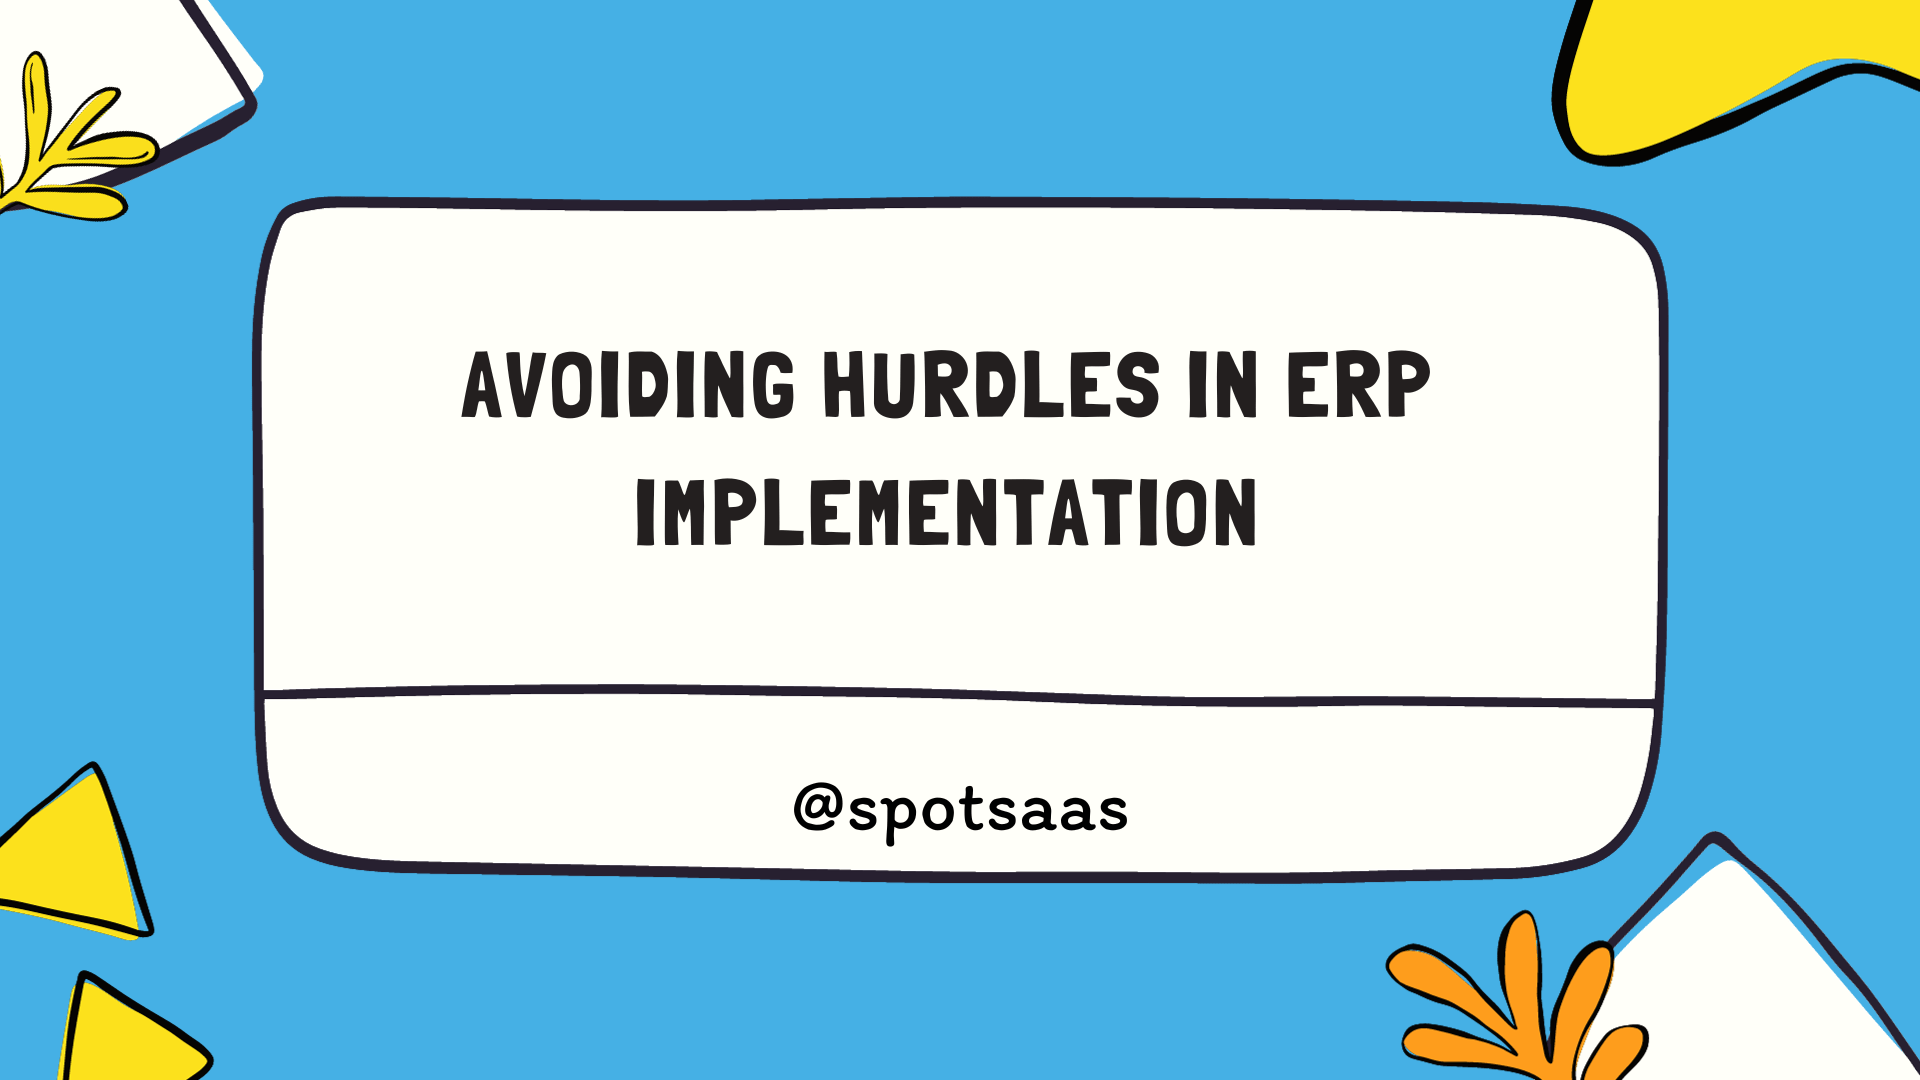 ERP Implementation